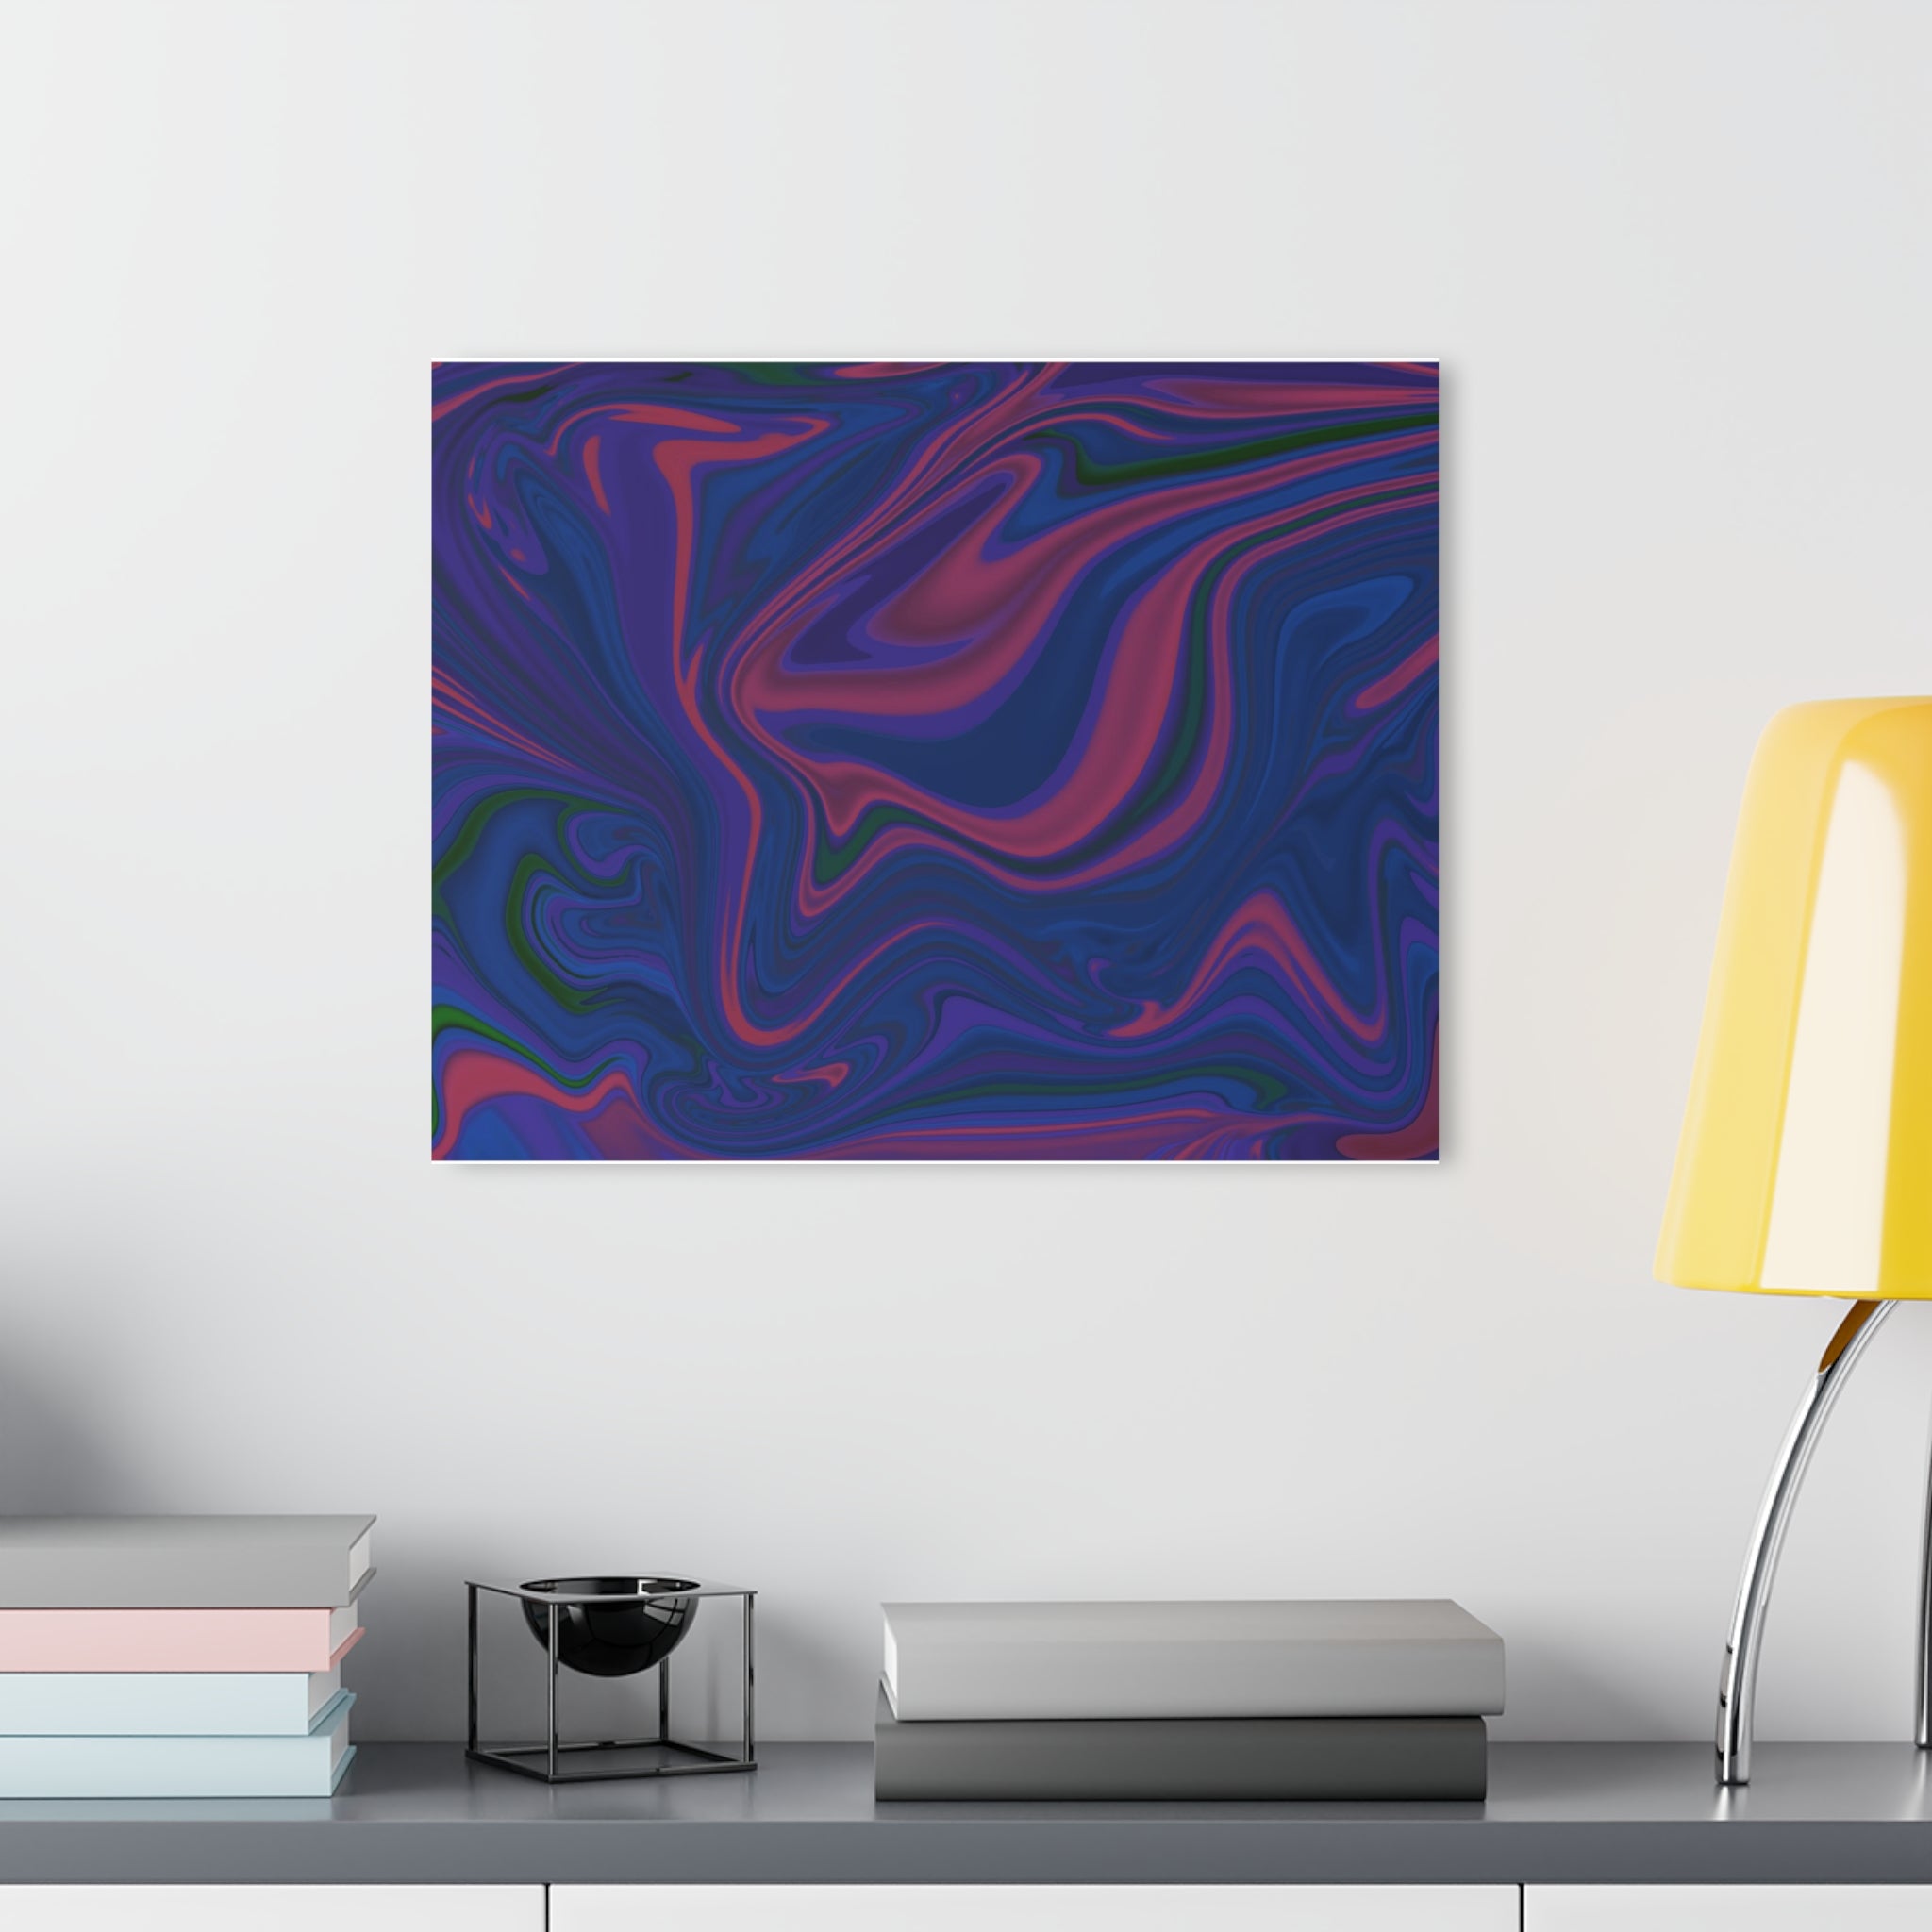 Velvet Mercury | Acrylic Print | 36x24 Inch | Fluid Abstract | Contemporary Wall Art